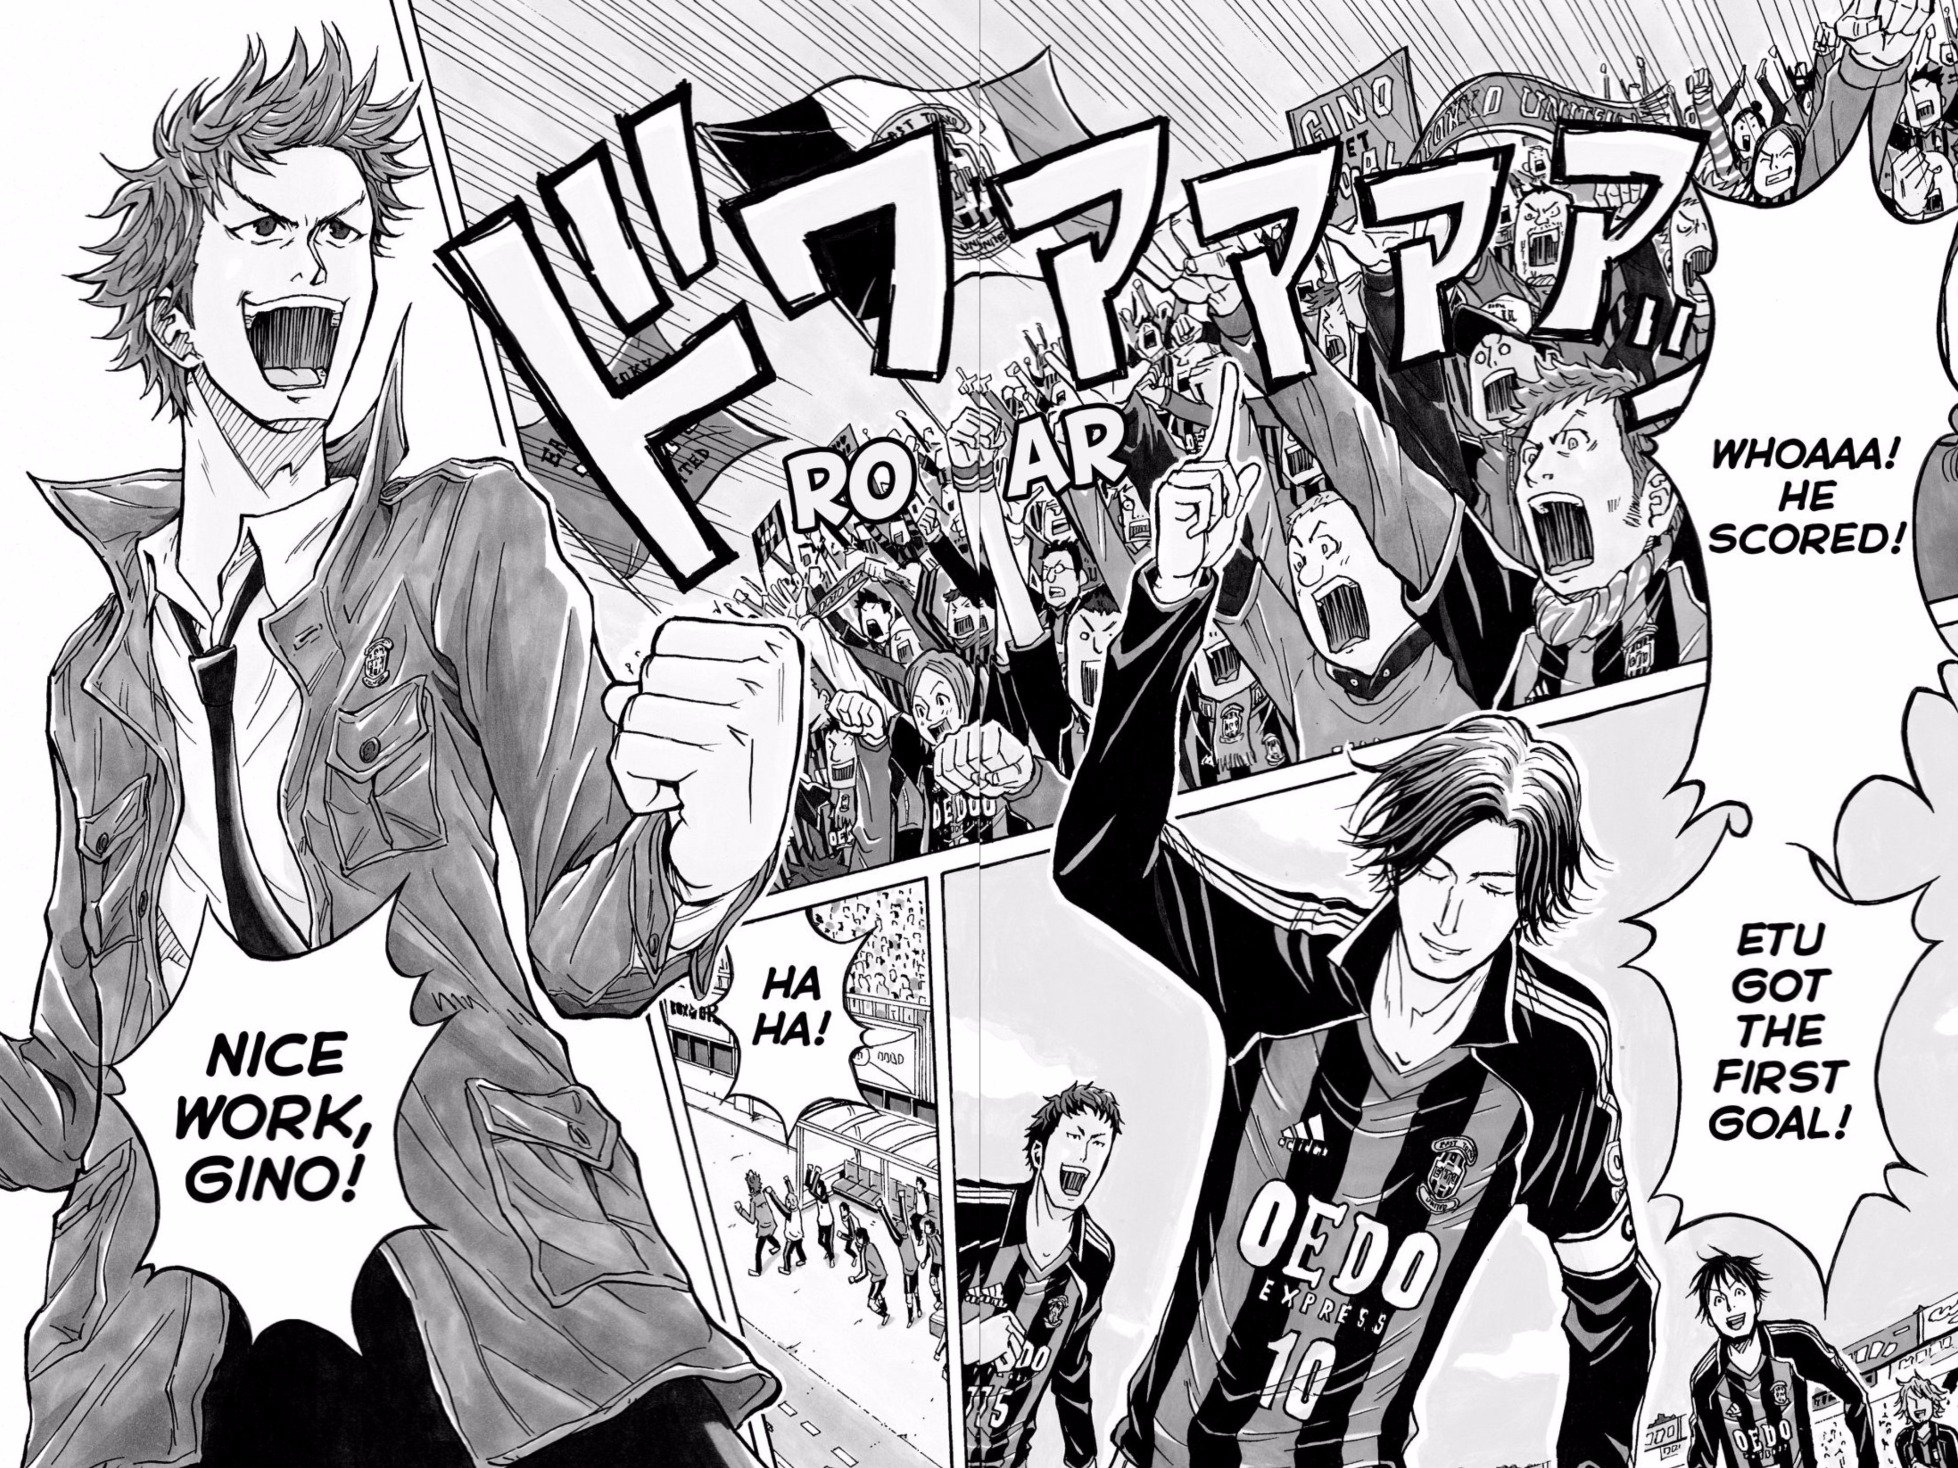 Giant Killing Vol. 1 - Manga Review — Taykobon